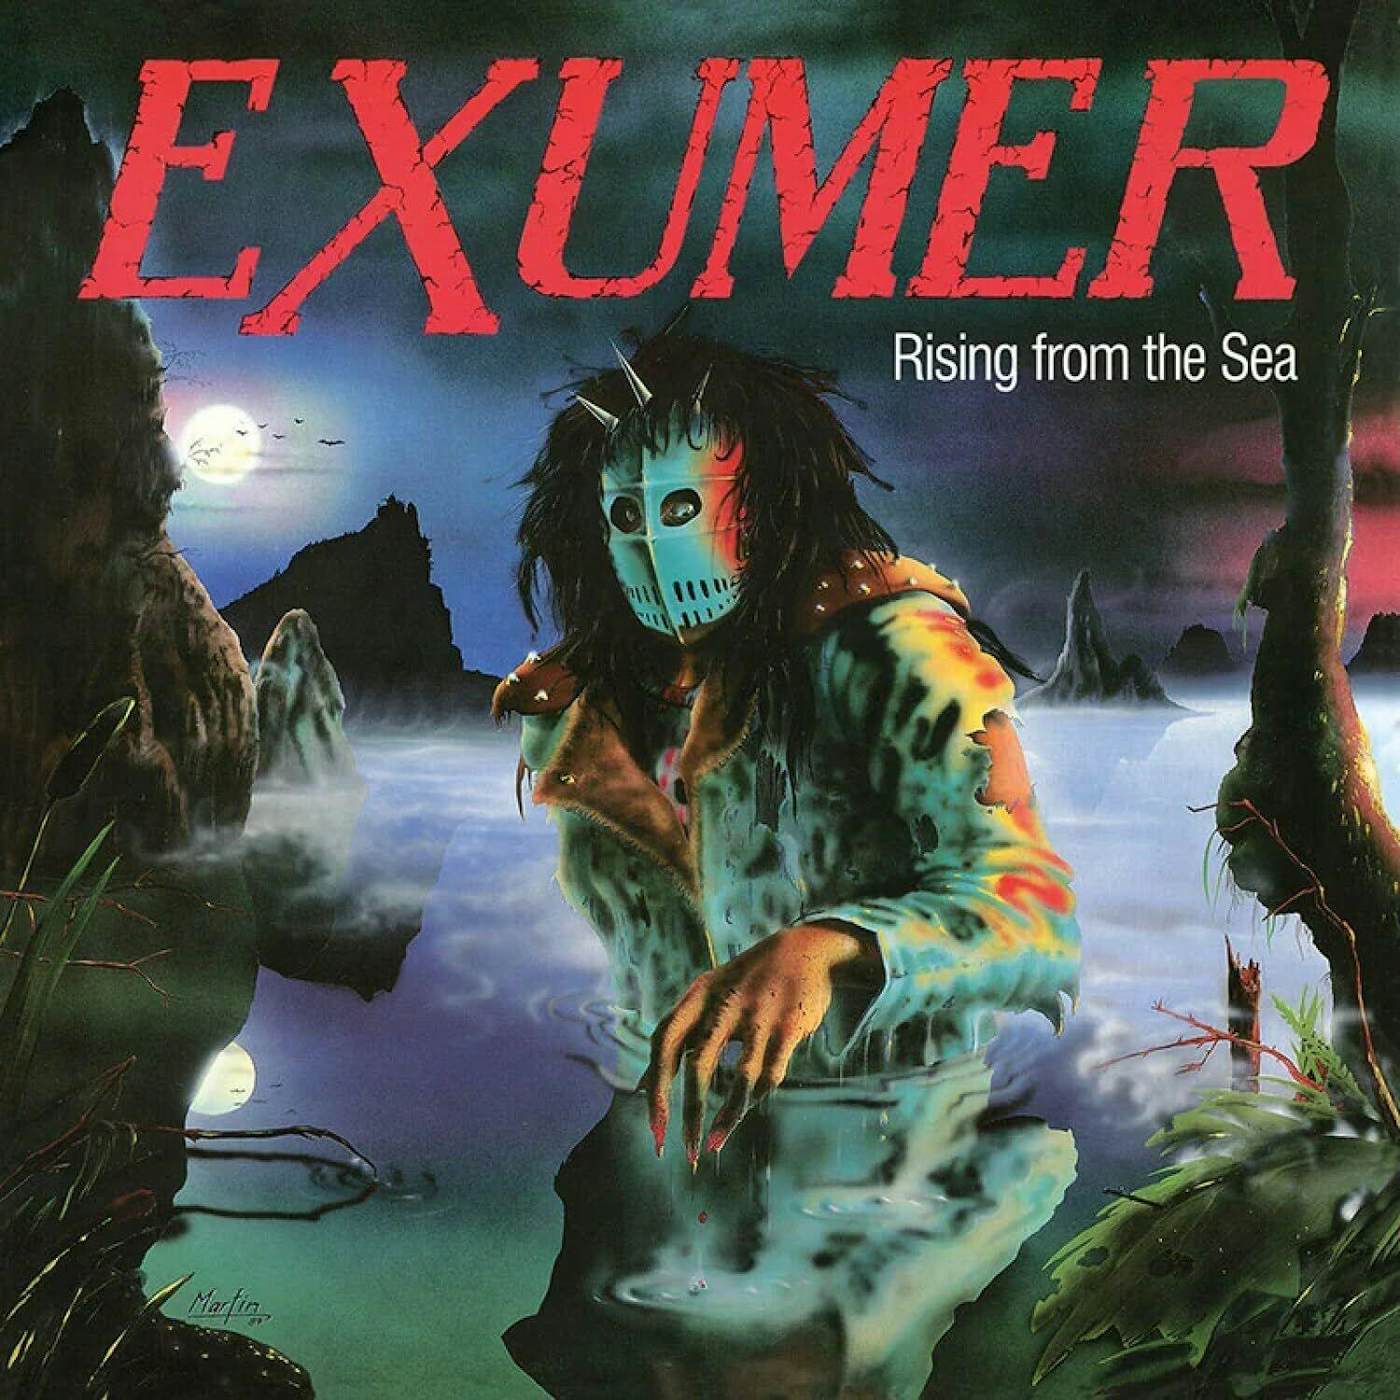 Exumer Rising From The Sea (Olive Green/aqua Blue Mixed W/ Red Splatter Vinyl Record)